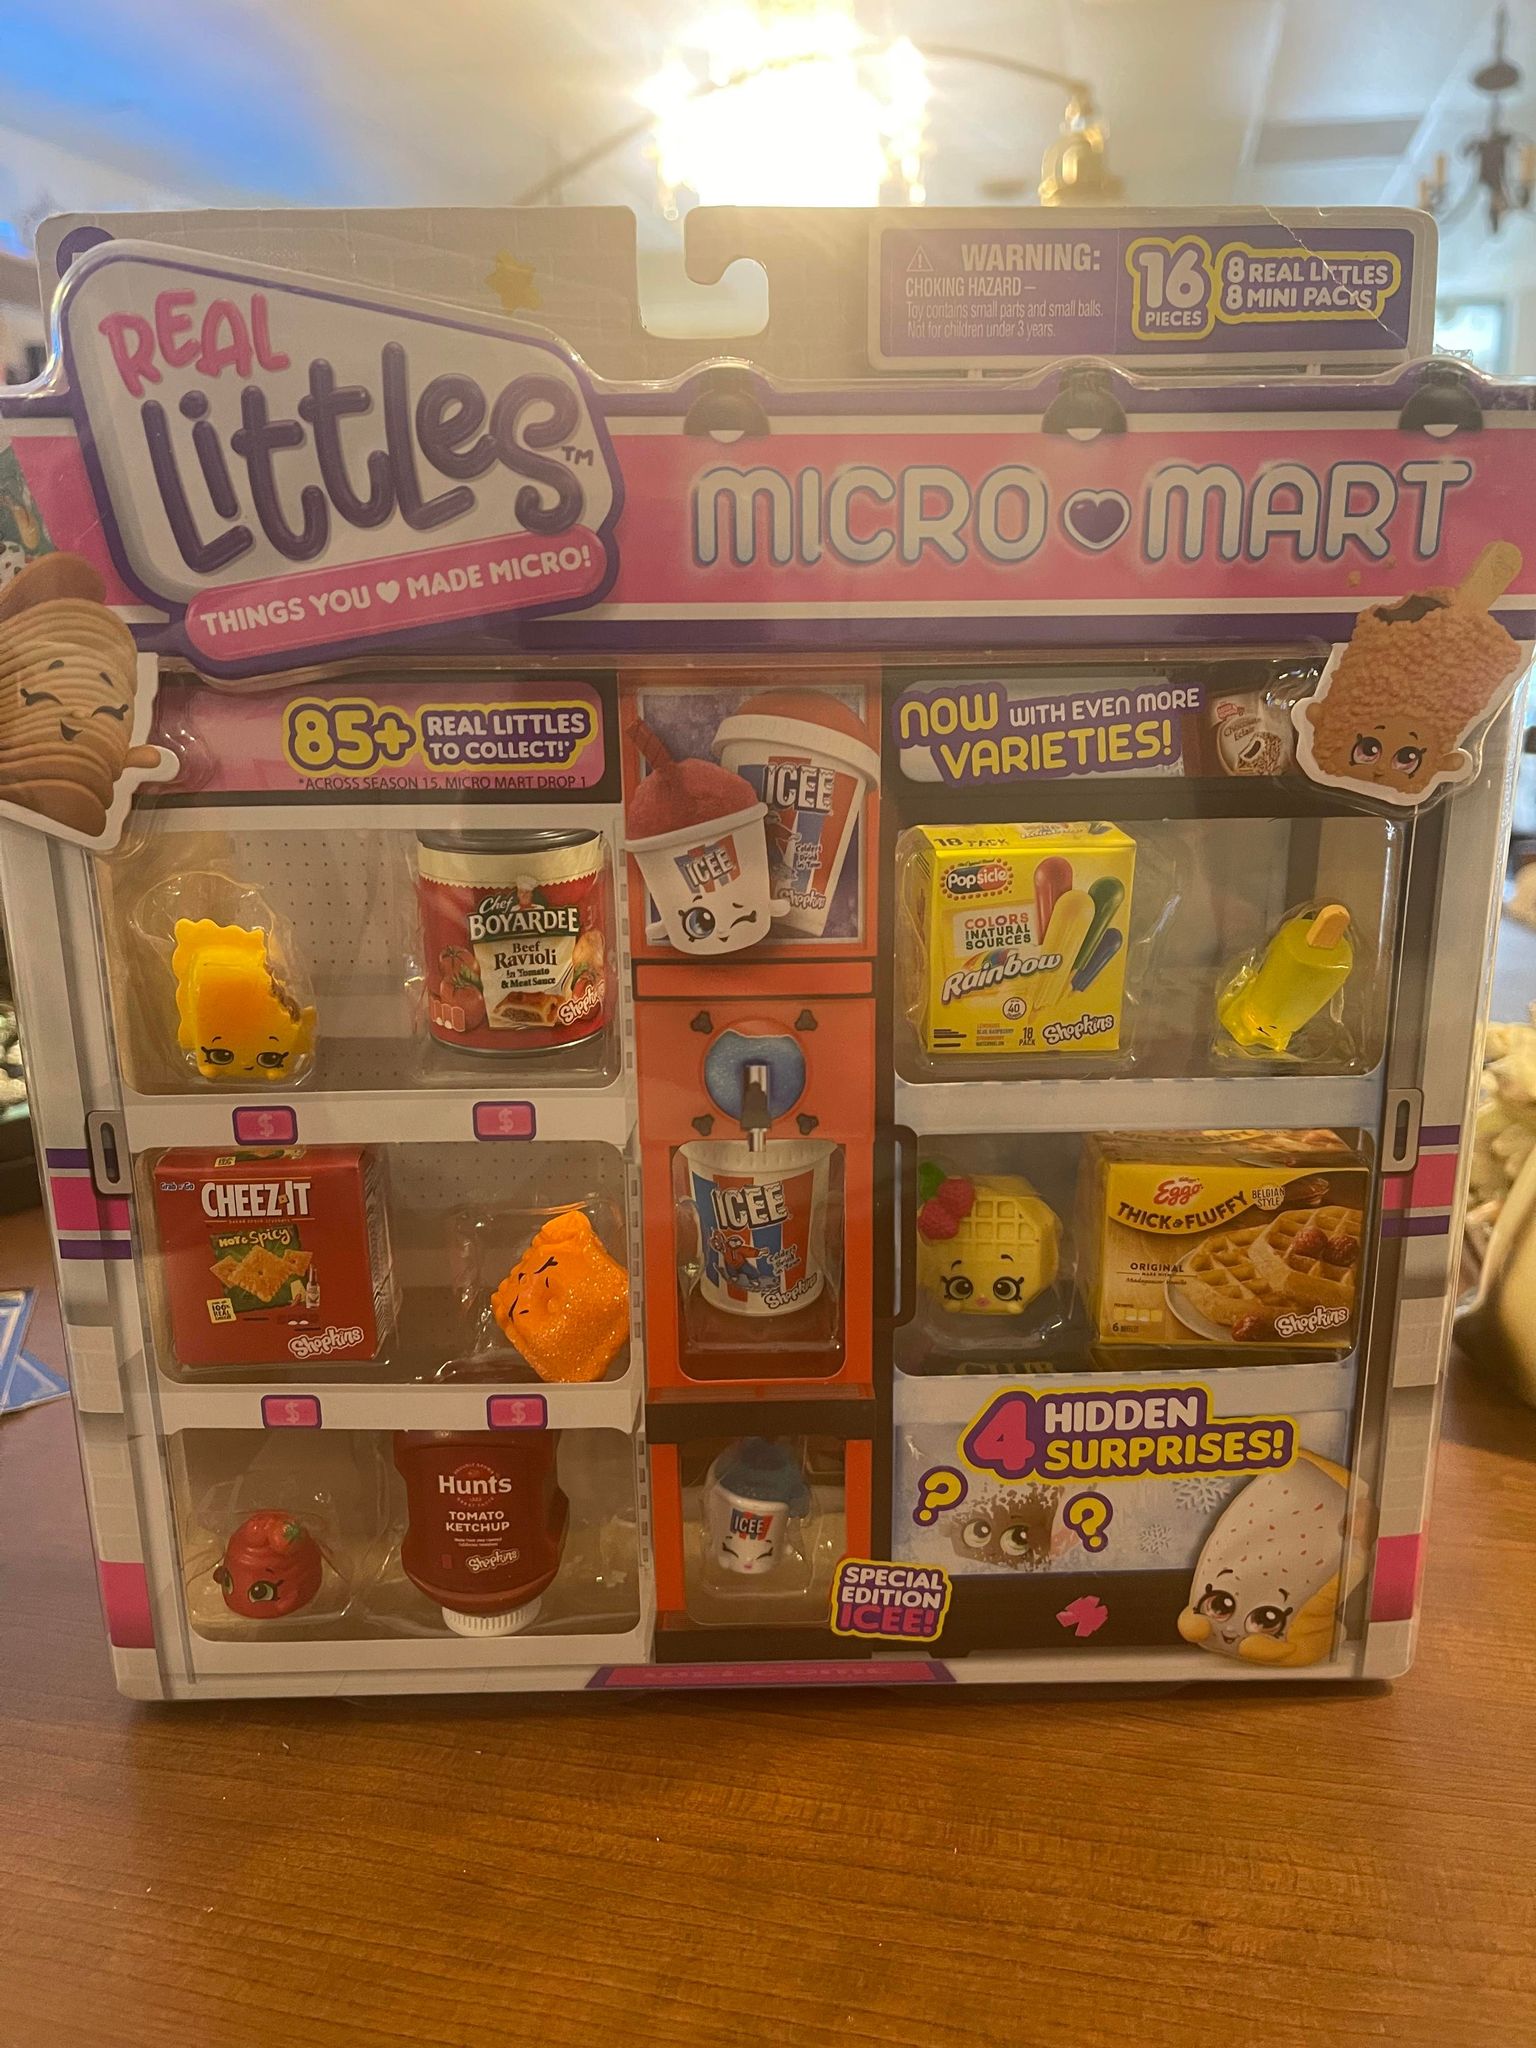 Real Littles Mini Pack